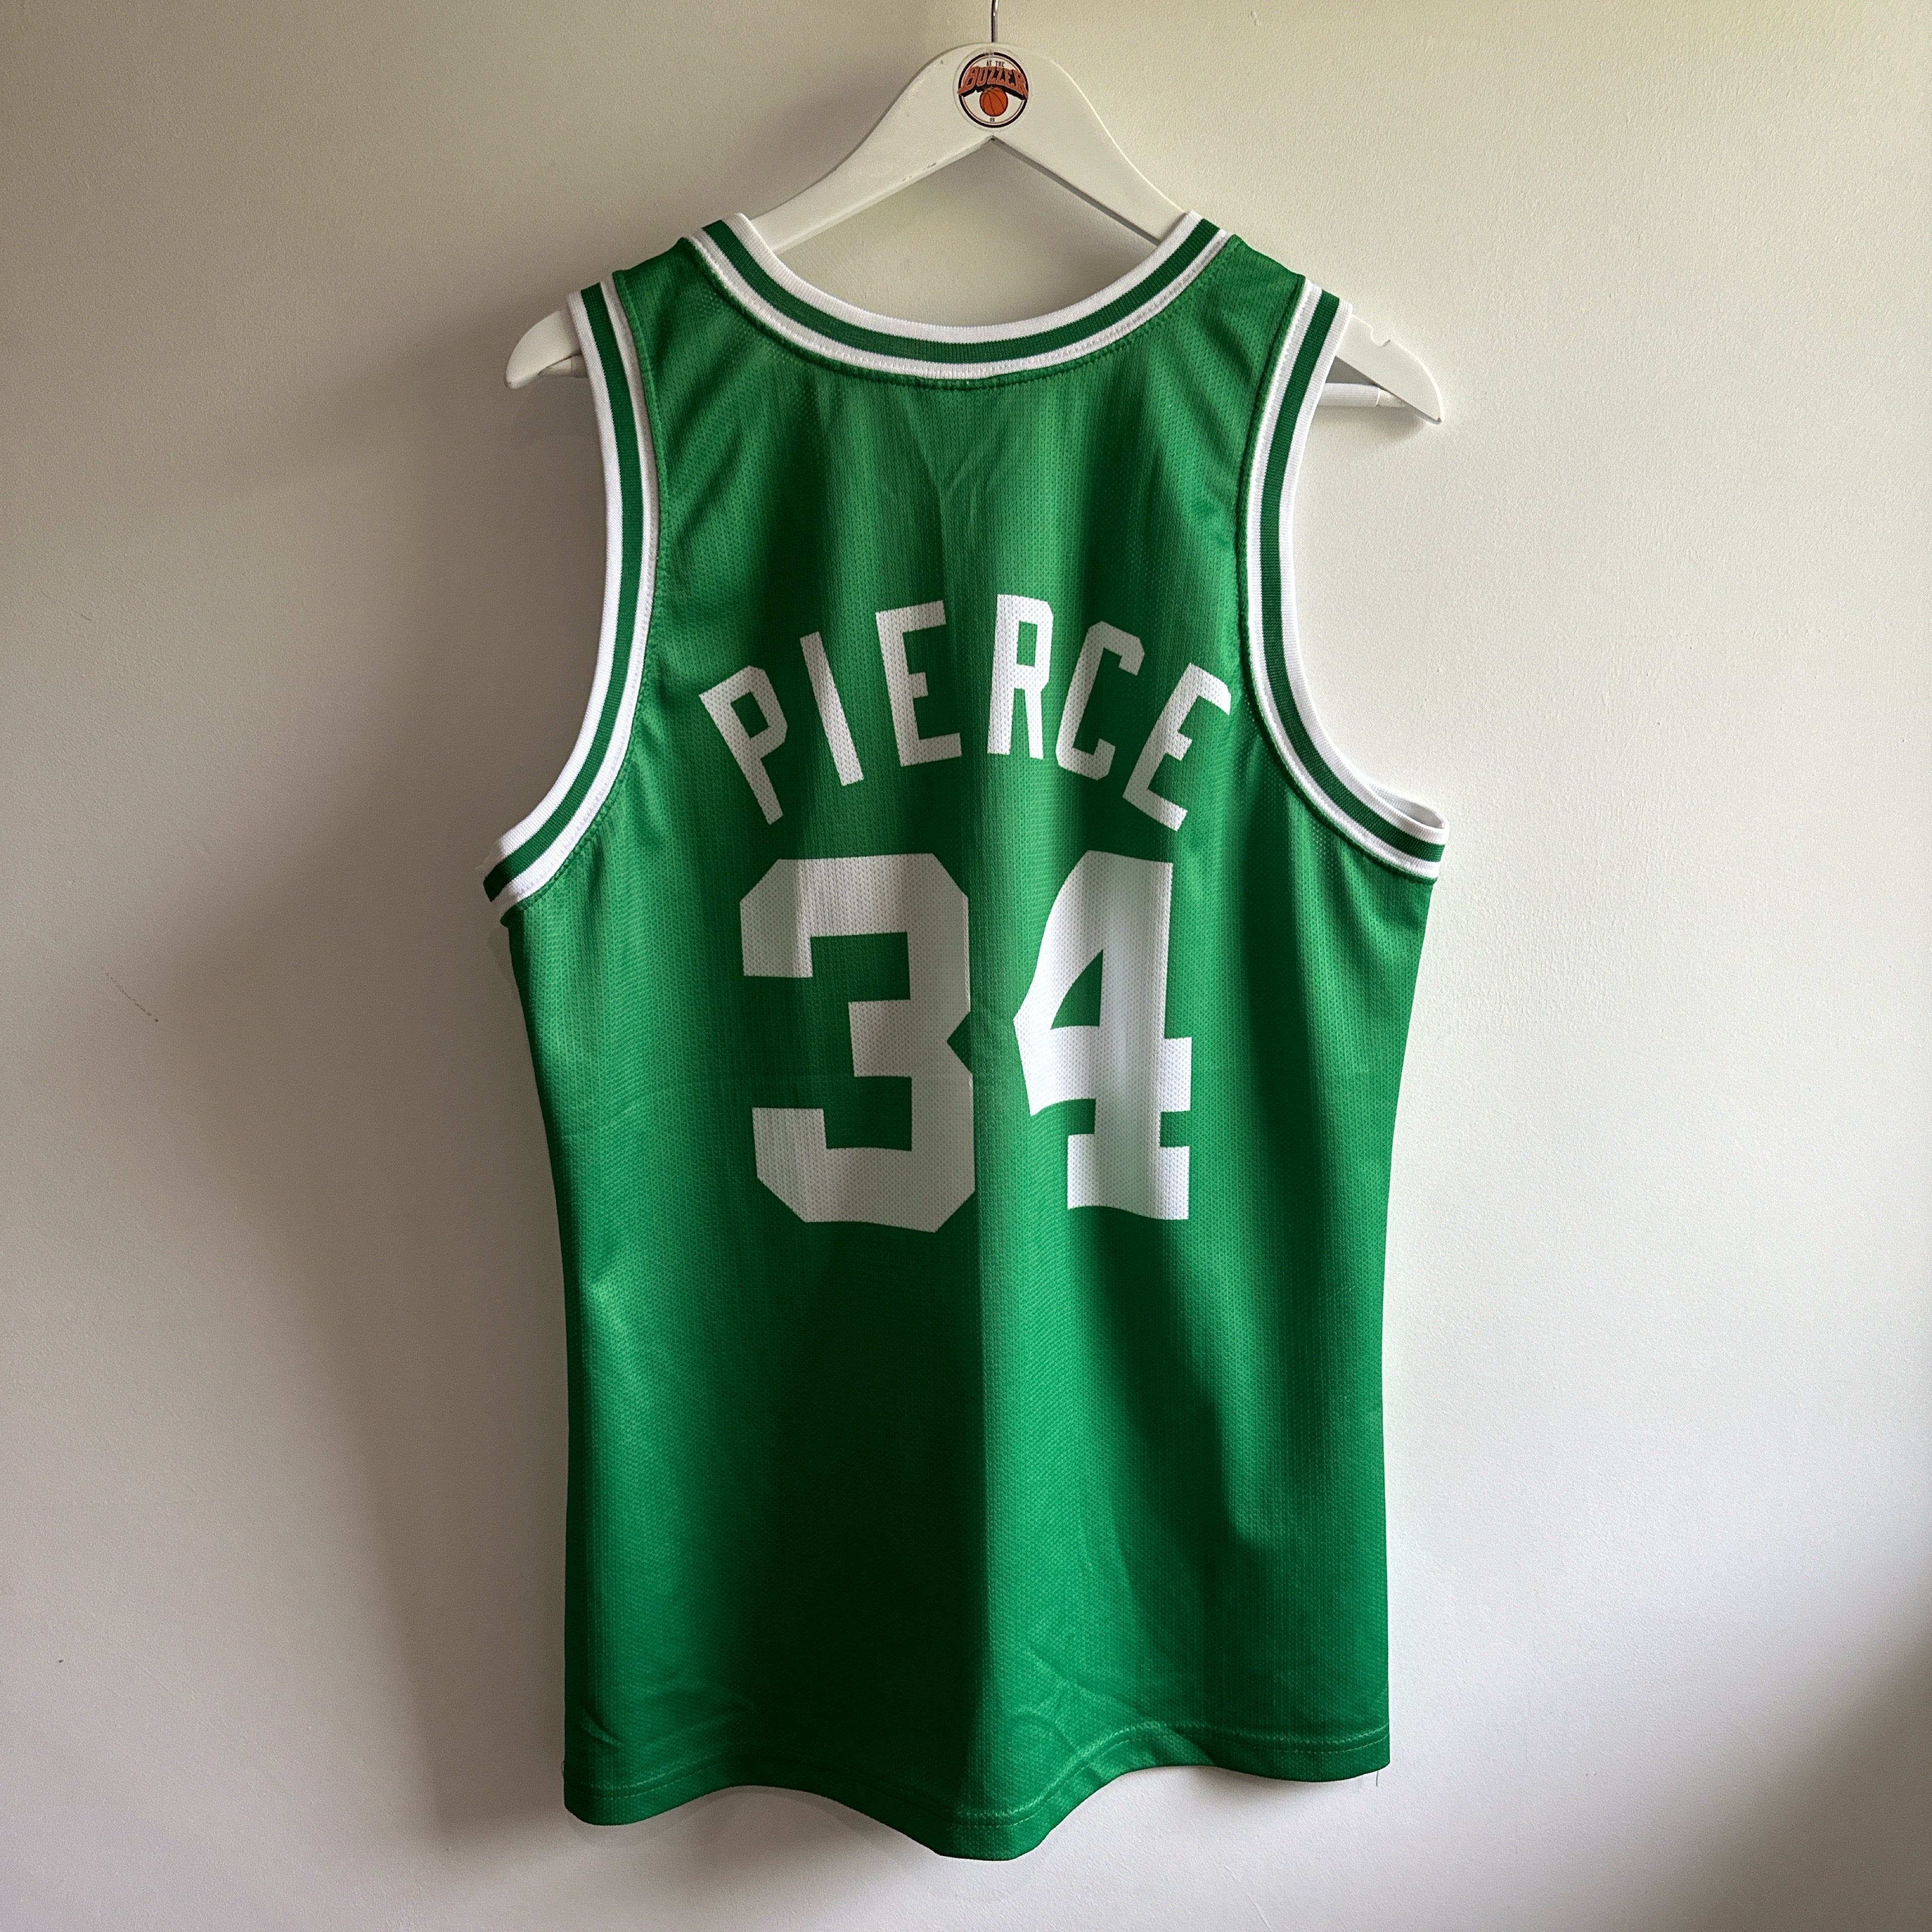 Boston Celtics Paul Pierce Champion jersey - Large